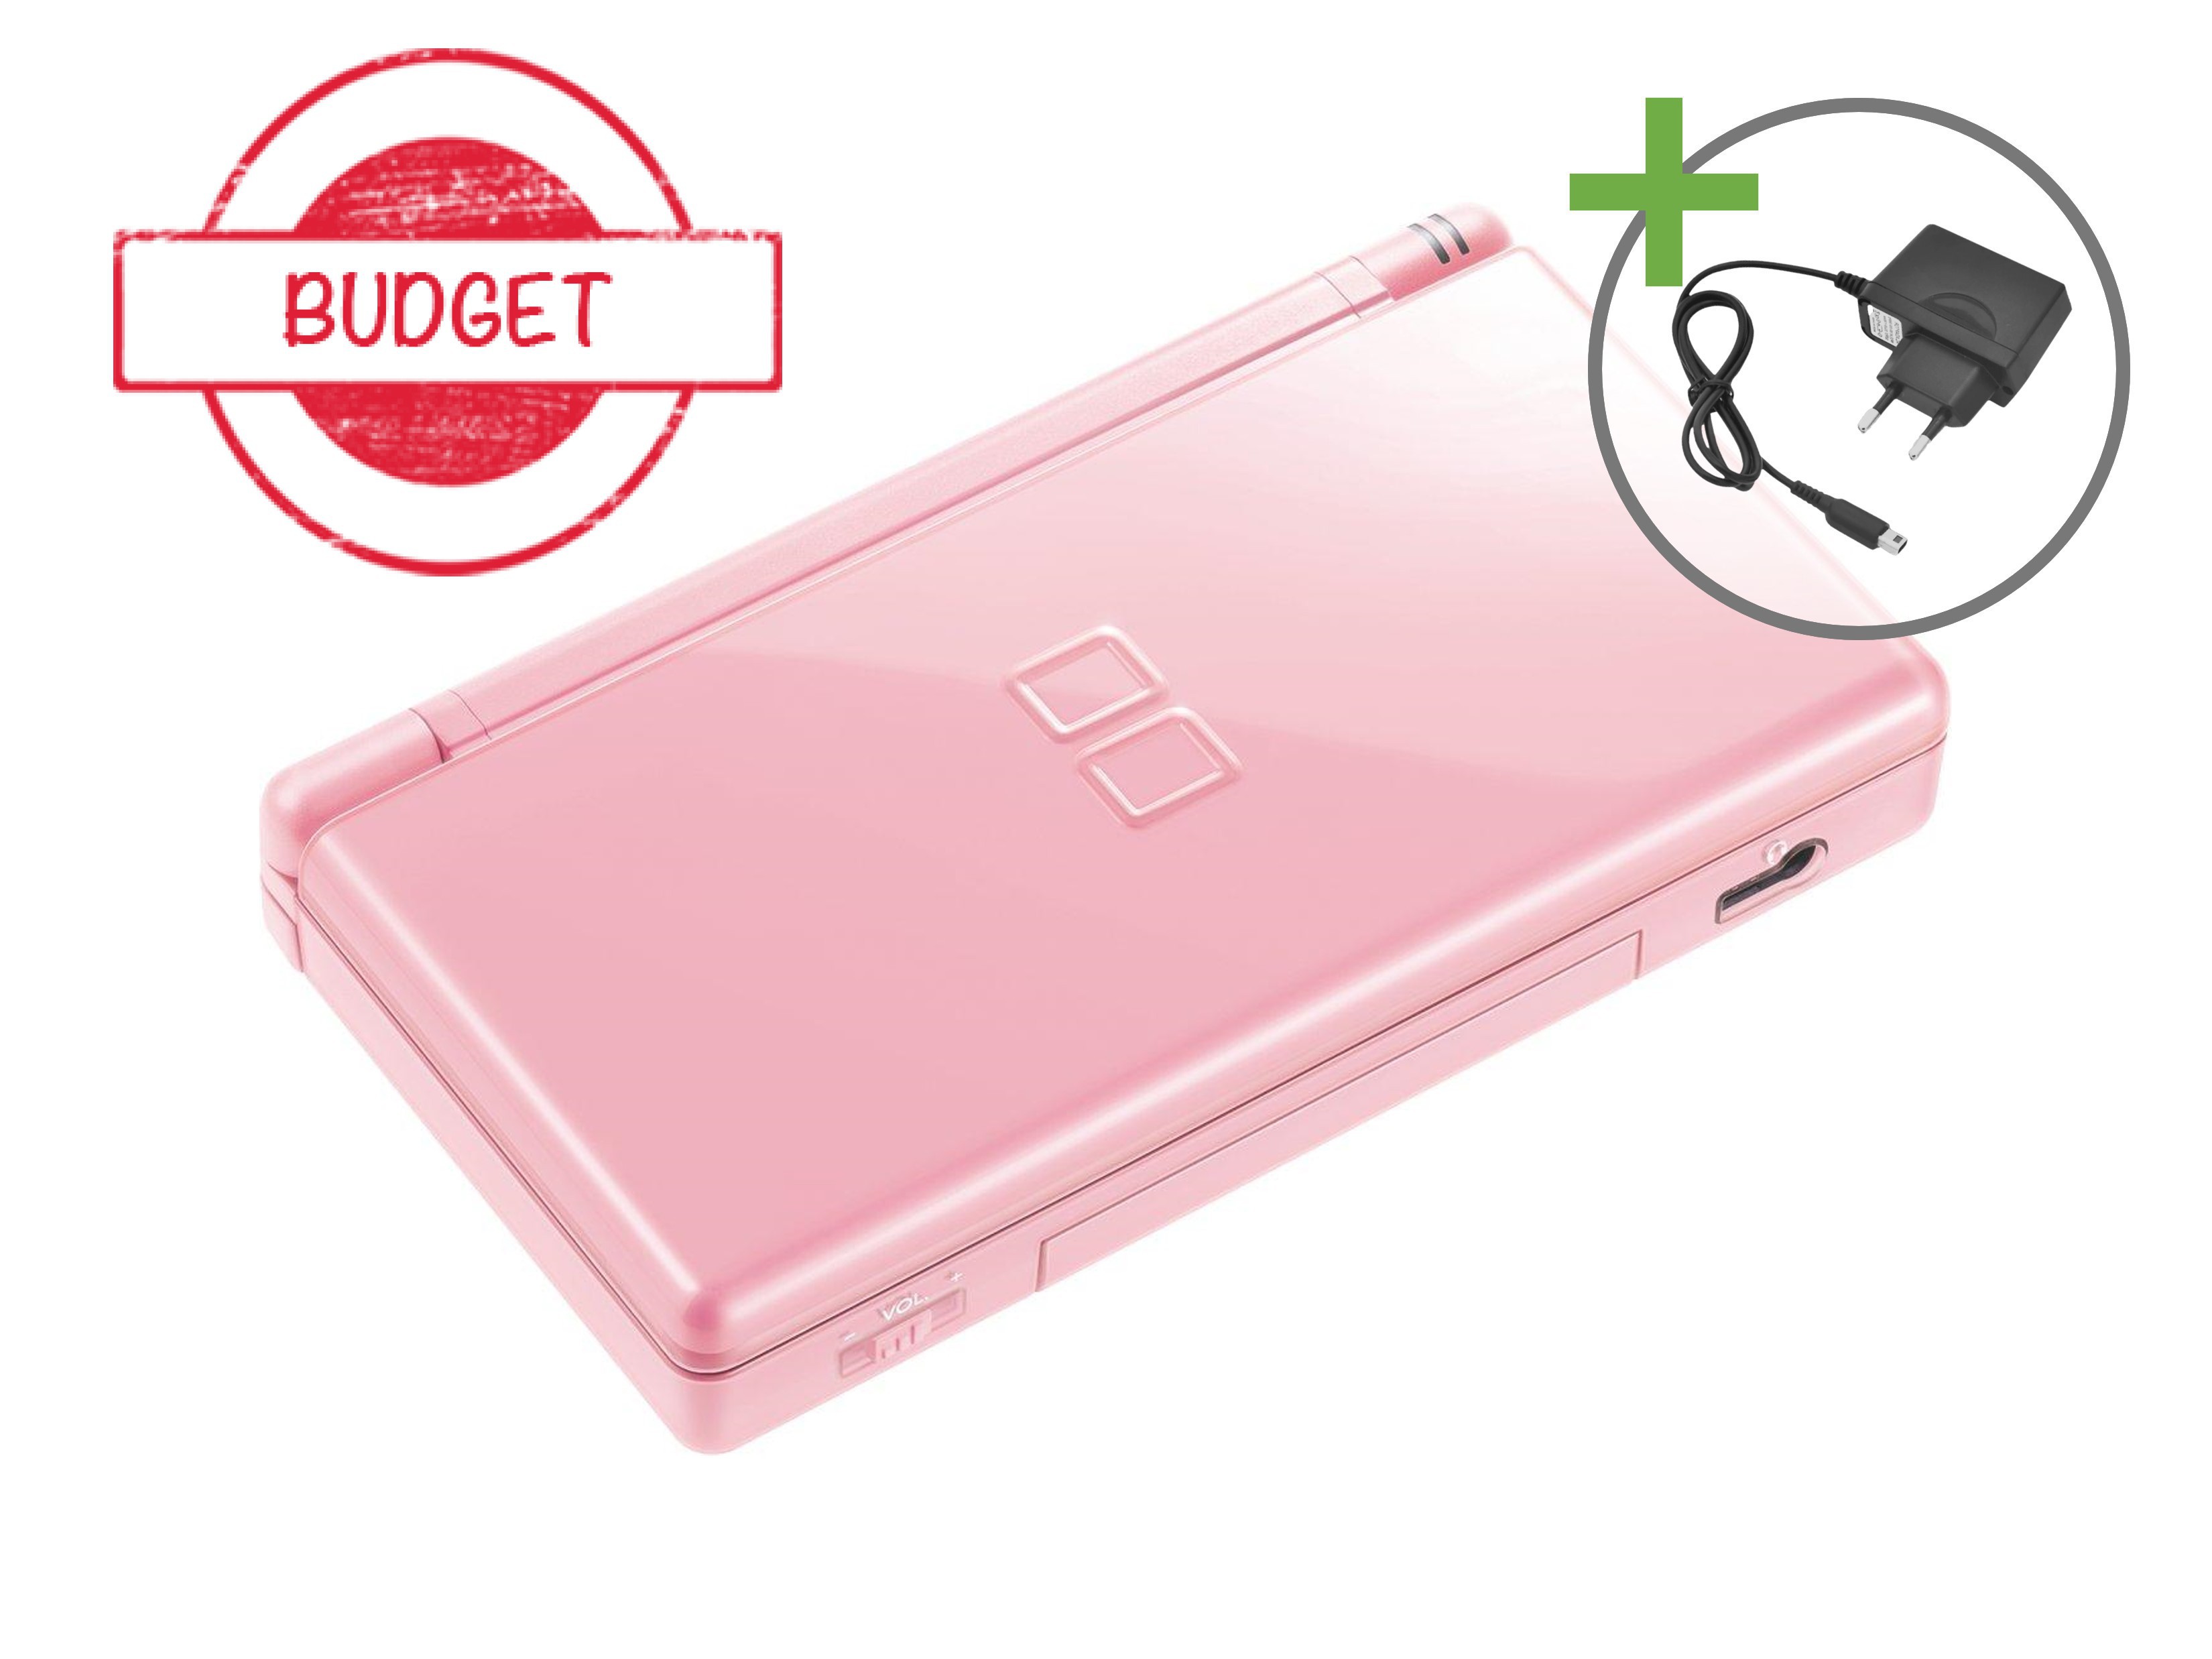 Nintendo DS Lite Pink - Budget - Nintendo DS Hardware - 3